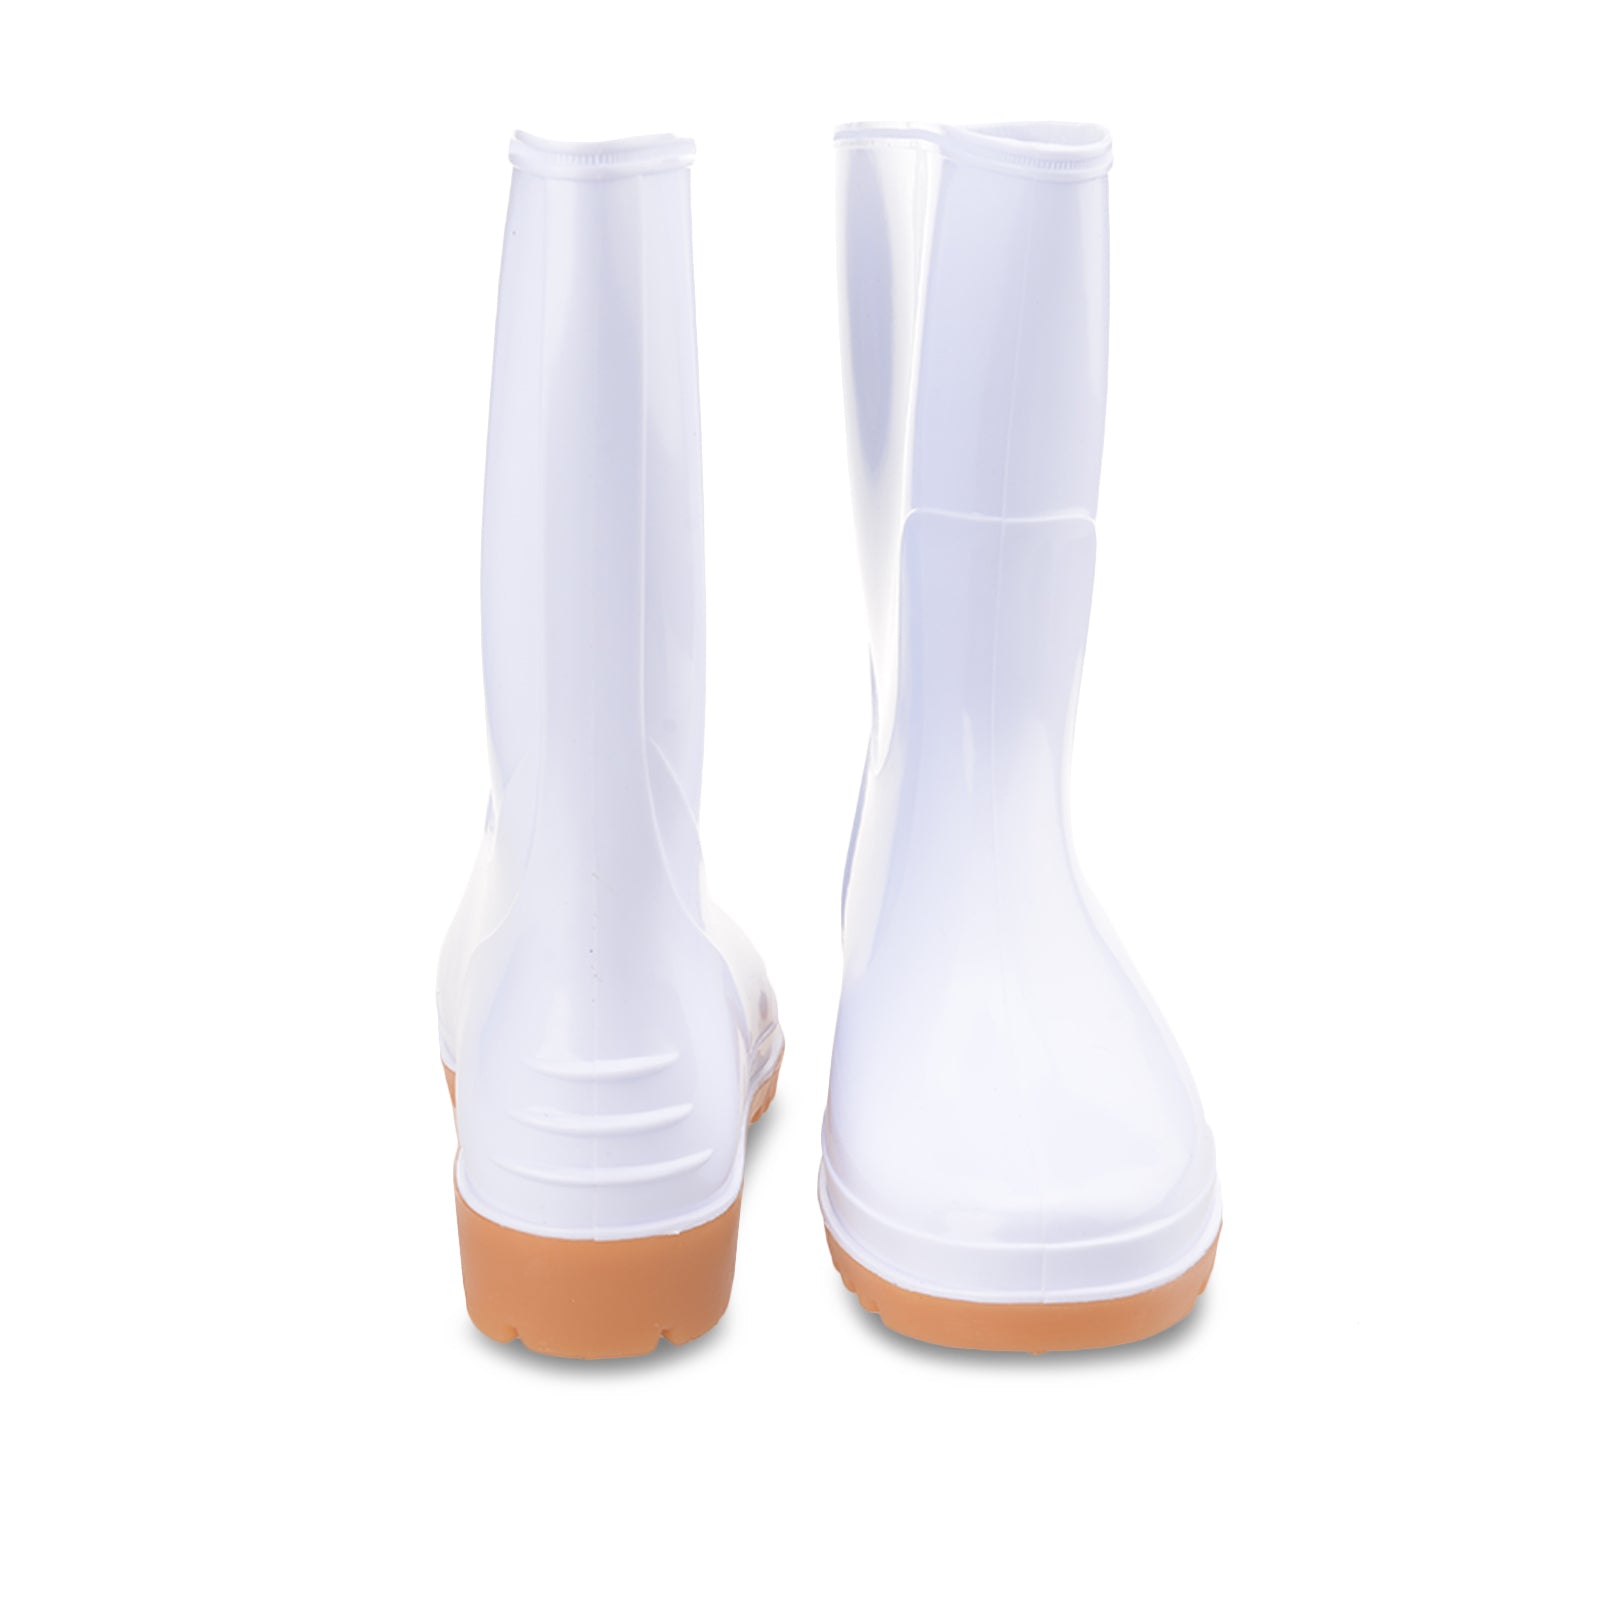 LT301-L Short Labor Rain Boots (Hong Kong Safety Mark)-FAST-WH-EU Size: 36-偉豐鞋 WELL SHOE HK-Well Shoe-偉豐鞋-偉豐網-荃灣鞋店-Functional shoes-Hong Kong Tsuen Wan Shoe Store-Tai Wan Shoe-Japan Shoe-高品質功能鞋-台灣進口鞋-日本進口鞋-High-quality shoes-鞋類配件-荃灣進口鞋-香港鞋店-優質鞋類產品-水靴-帆布鞋-廚師鞋-香港鞋品牌-Hong Kong Shoes brand-長者鞋-Hong Kong Rain Boots-Kitchen shoes-Cruthes-Slipper-Well Shoe Hong Kong-Anello-Arriba-休閒鞋-舒適鞋-健康鞋-皮鞋-Healthy shoes-Leather shoes-Hiking shoes